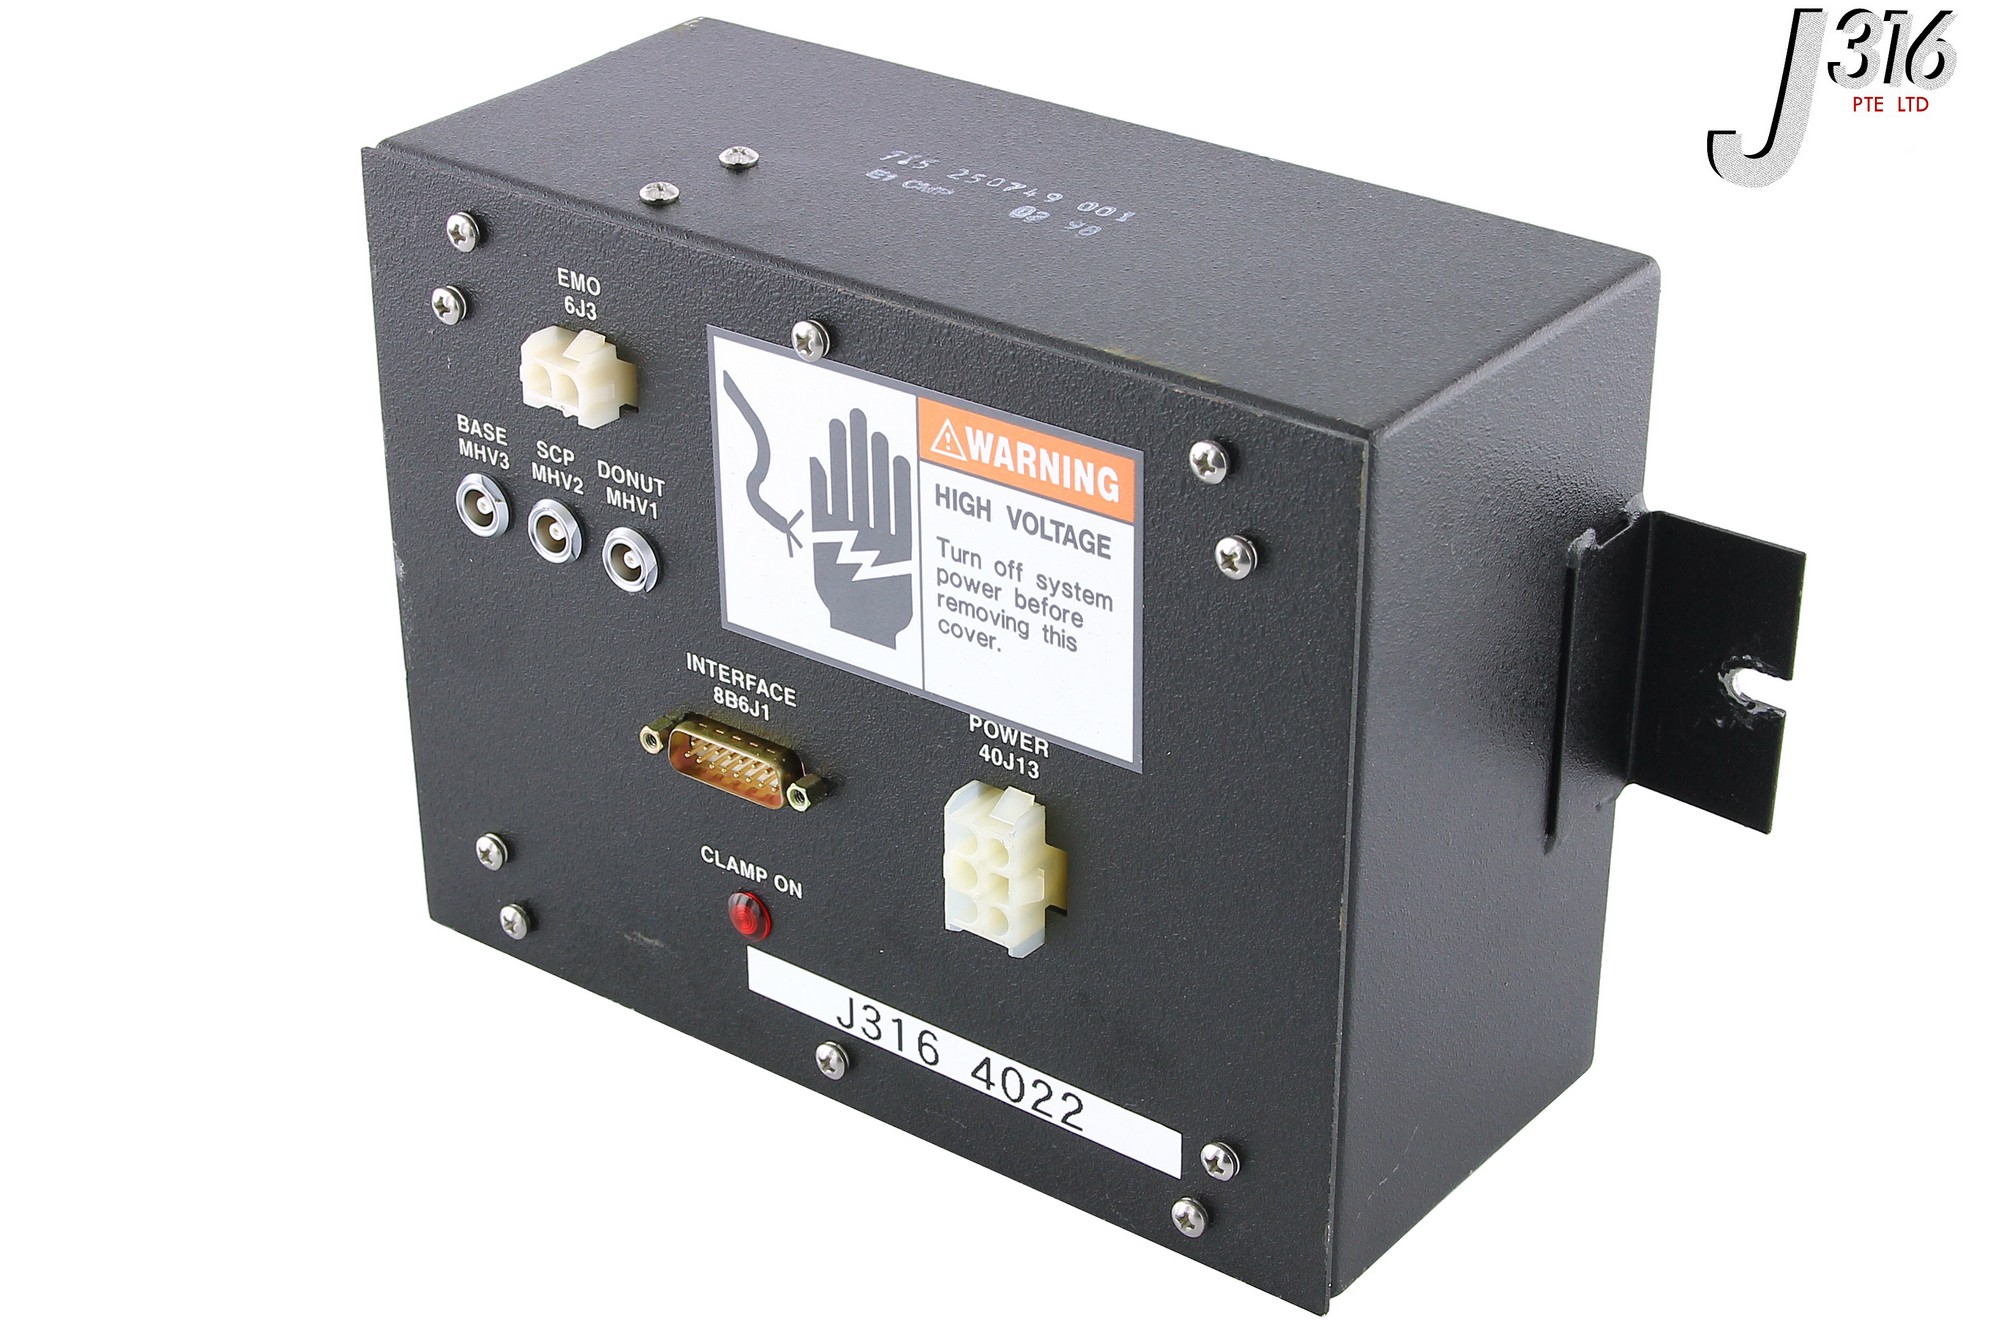 4022 LAM RESEARCH ESC POWER SUPPLY CONTROL BOX 853-250758-001-1-221 | eBay